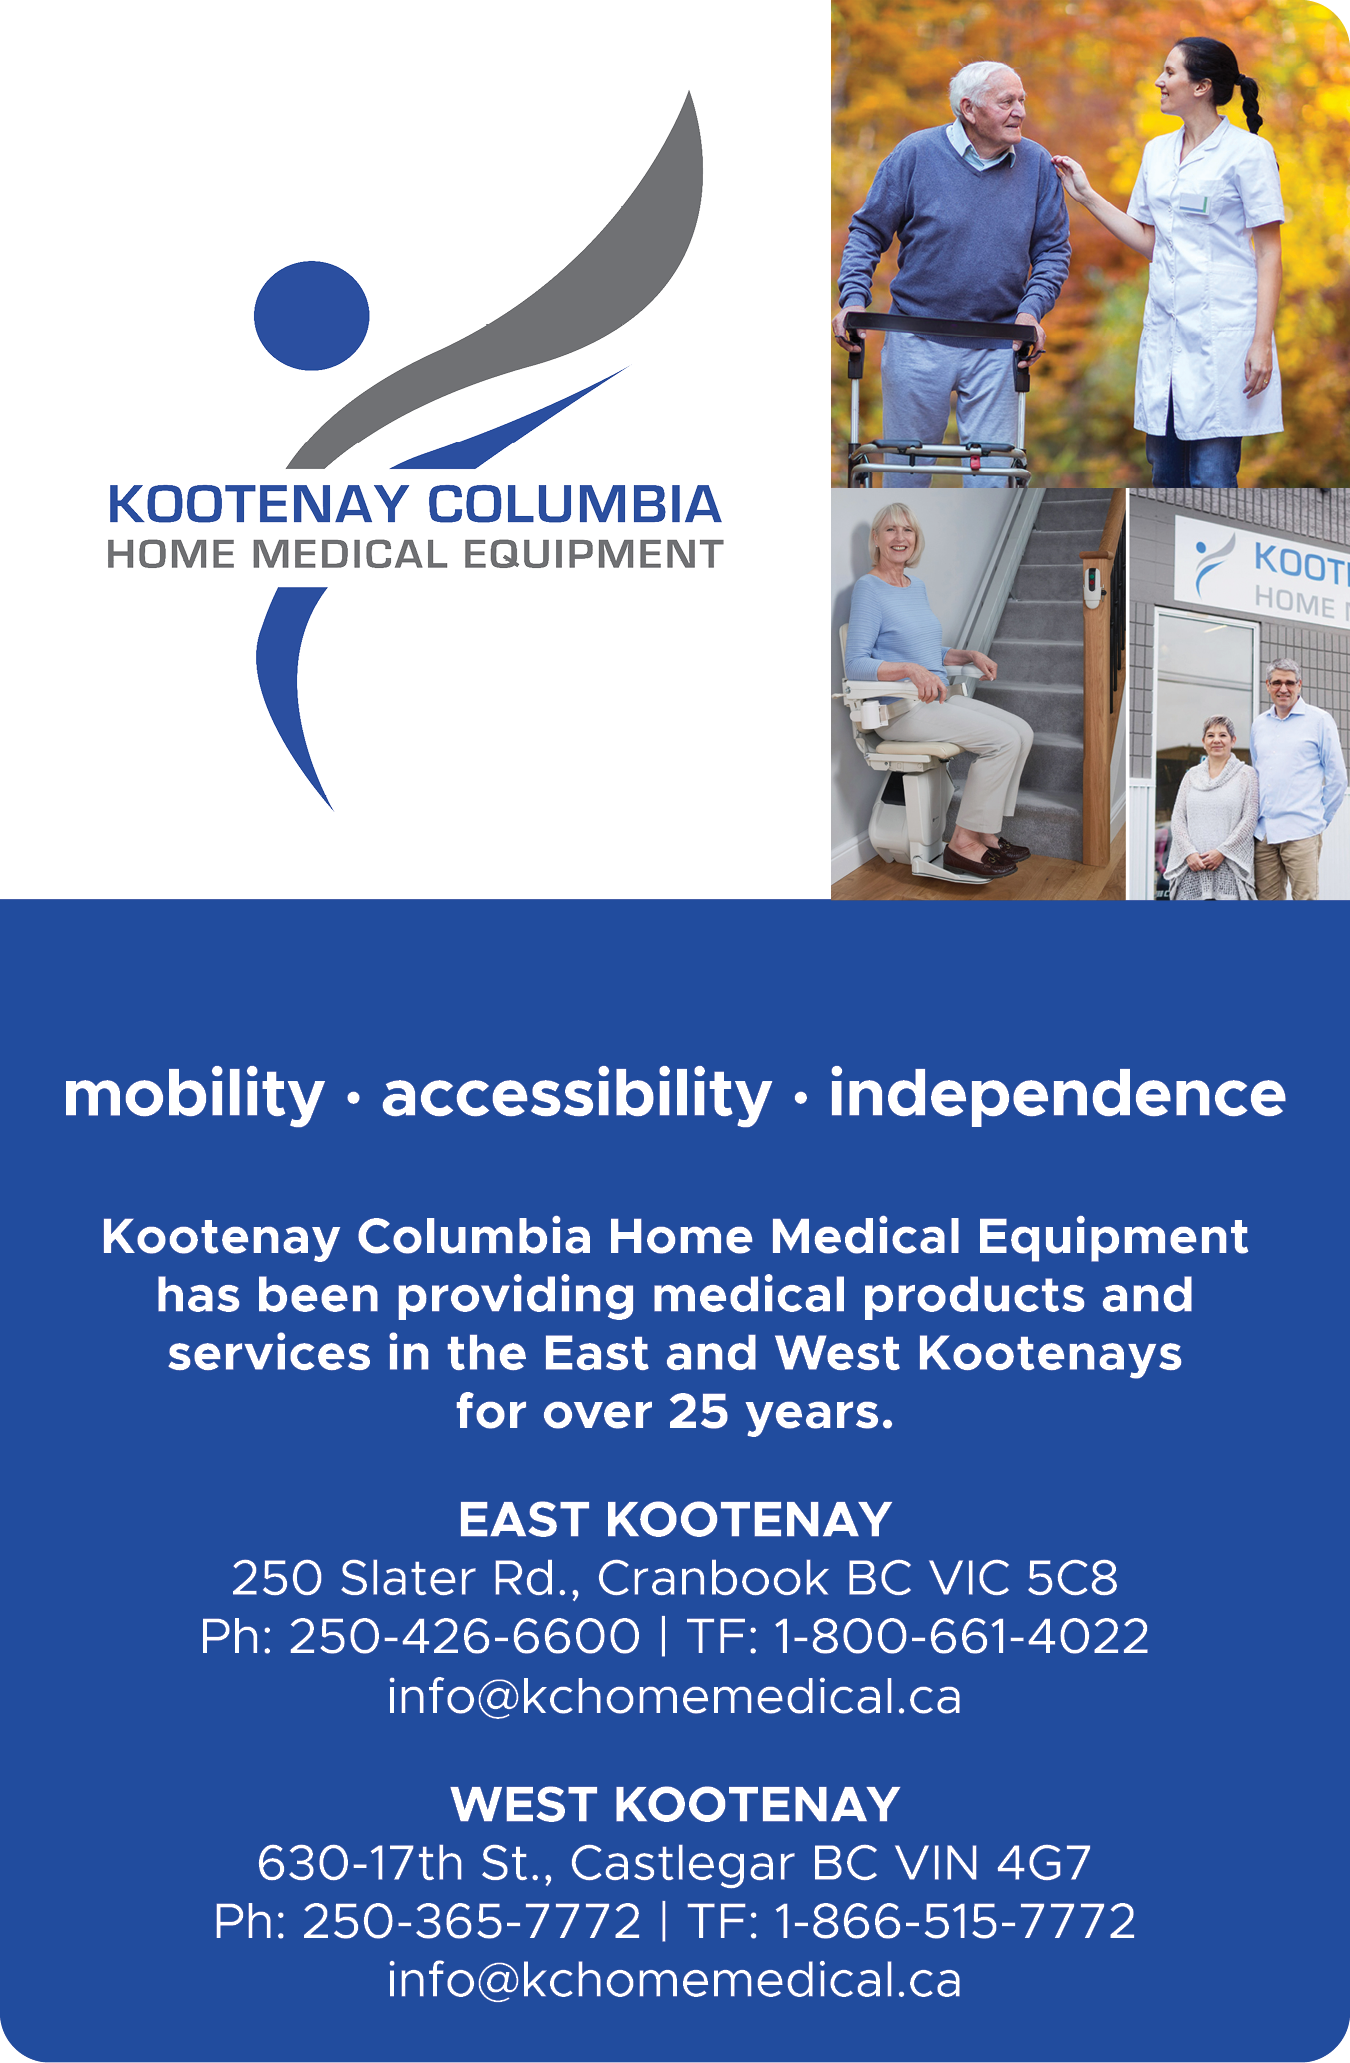 Kootenay Columbia Home Medical Equipment